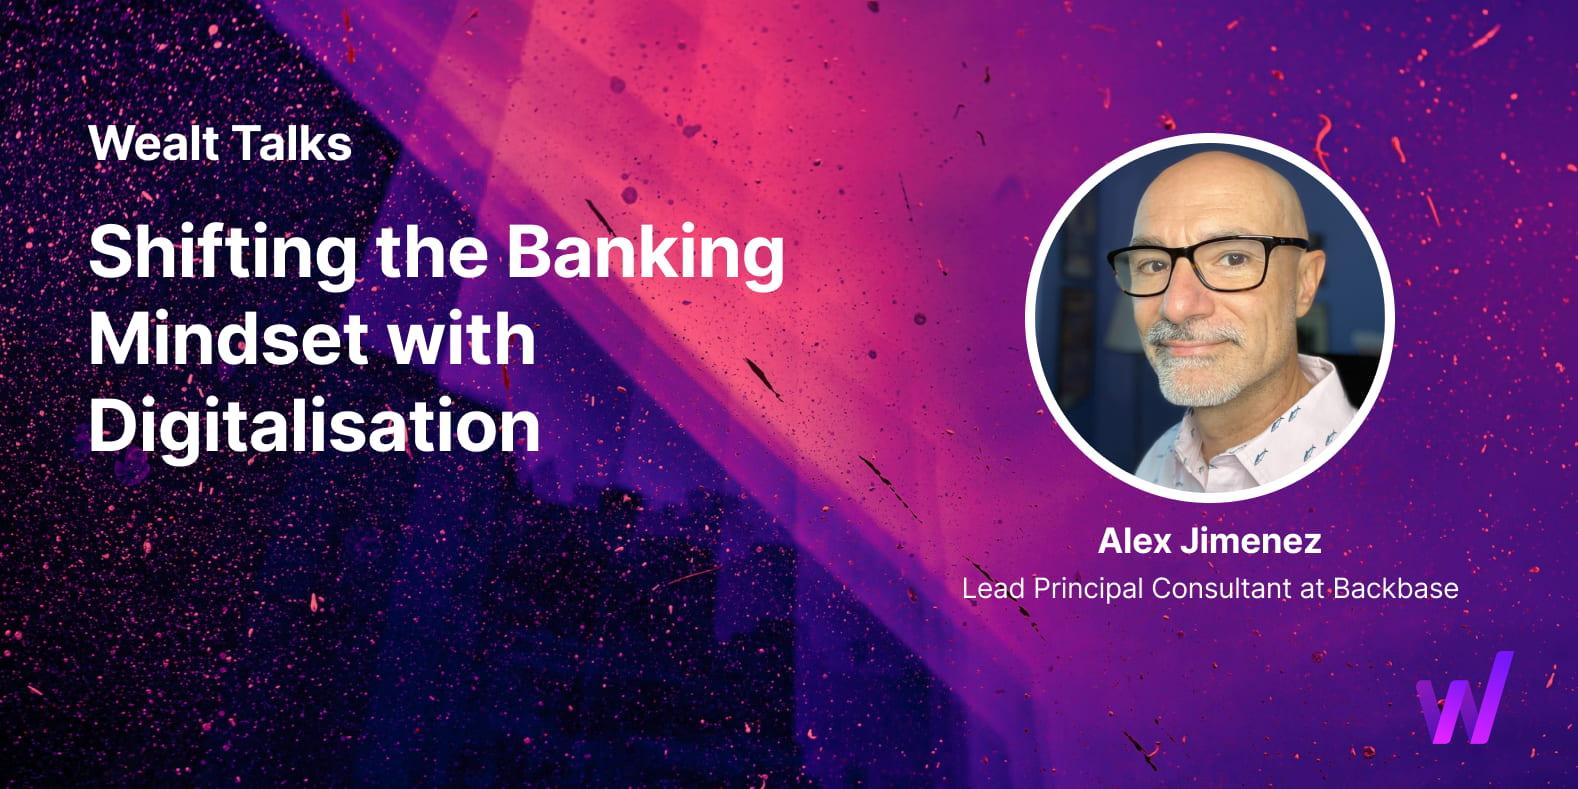 Wealt Talks - Shifting the banking mindset with digitalisation talk with Alex Jimenez, Lead Principal Consultant at Backbase